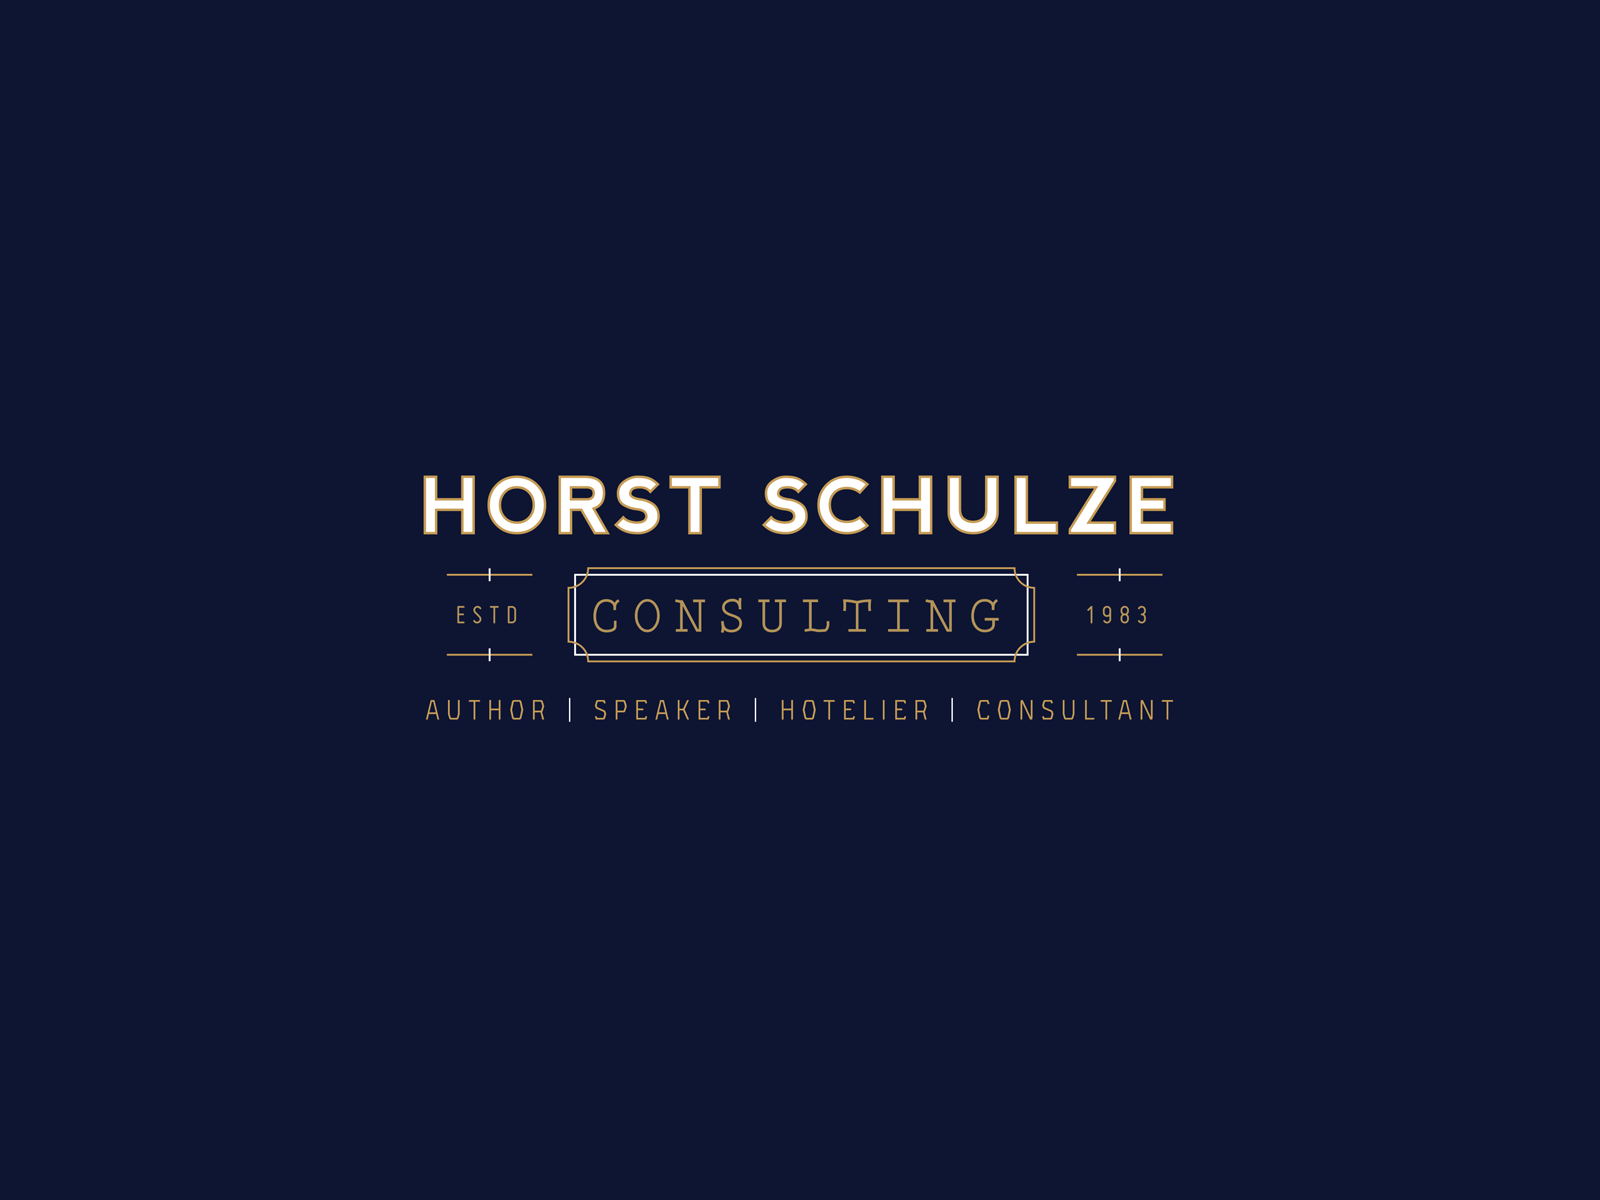 Horst Schulze